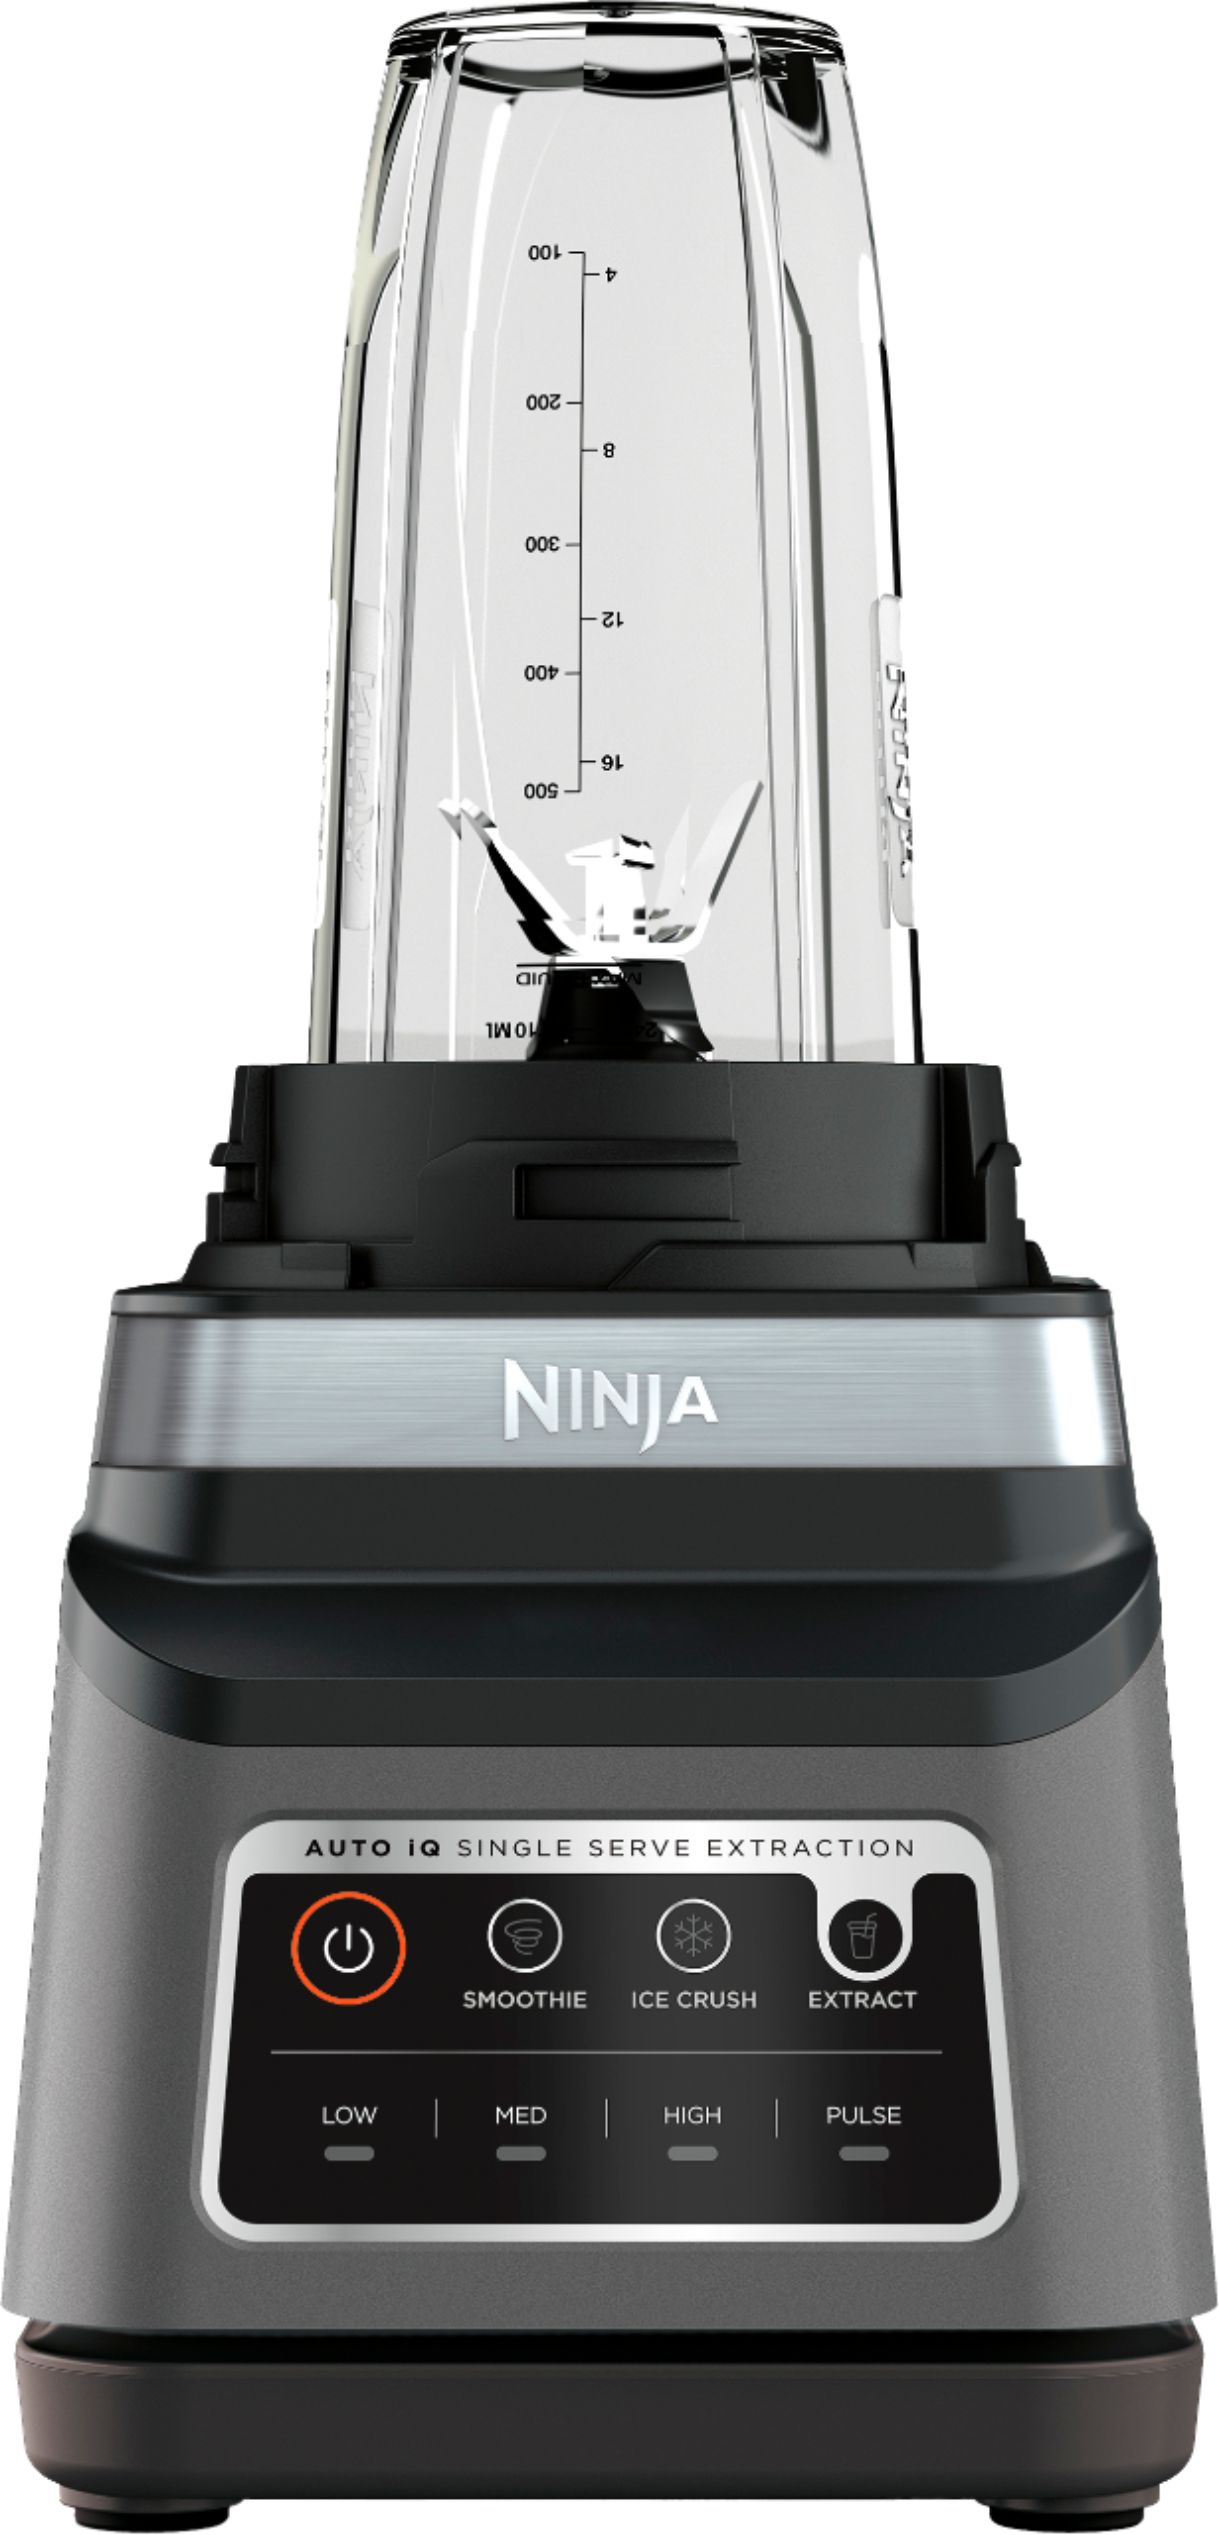 Ninja Professional Plus Blender DUO with Auto-iQ 1400 W BN751 Black/Silver New 